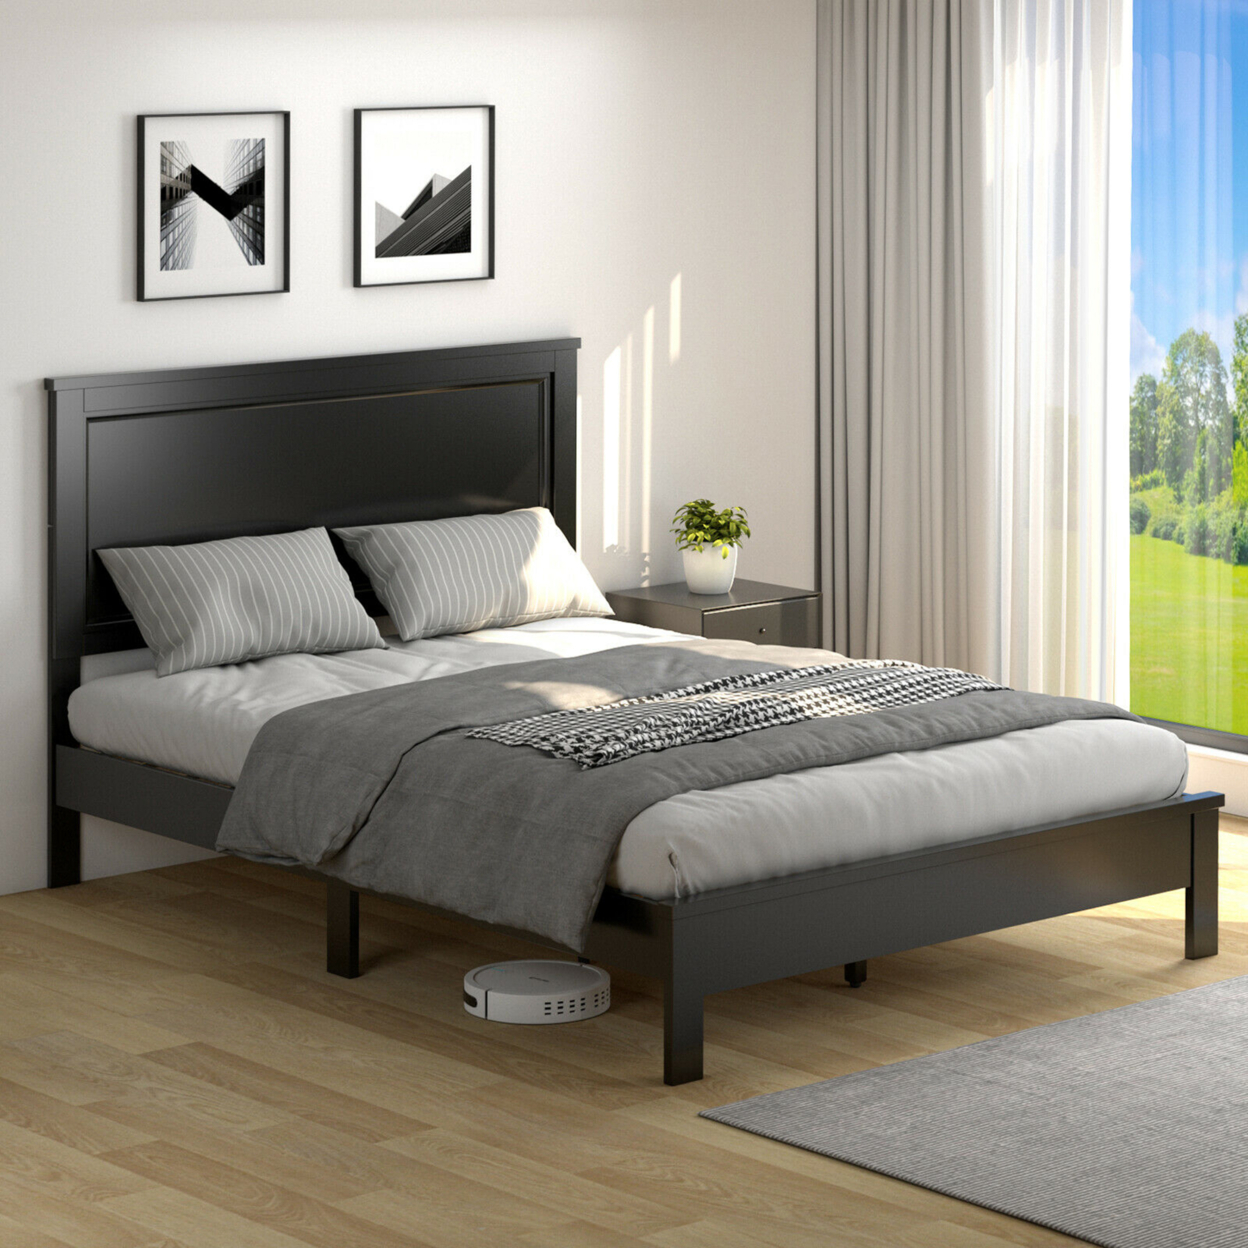 Twin/Full/Queen Size Bed Frame Platform Slat High Headboard Bedroom Rubber Wood Leg - Black, Full